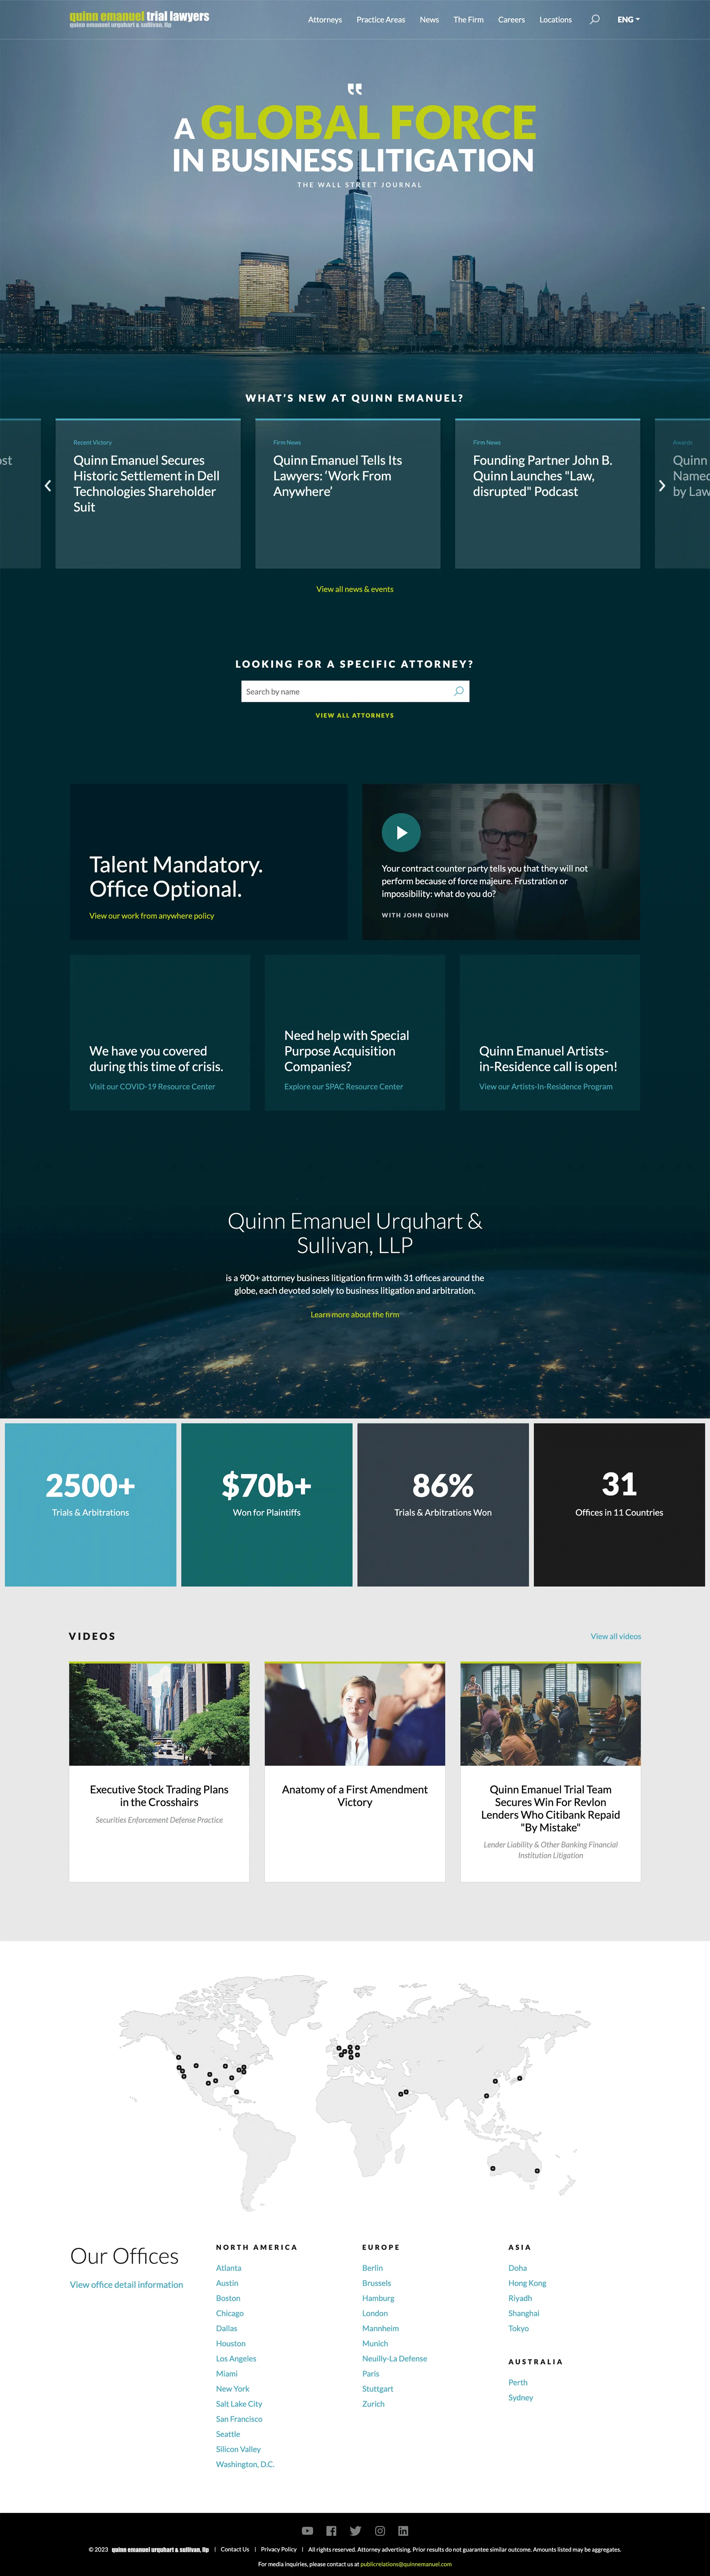 Quinn Emanuel Website Design Case Study